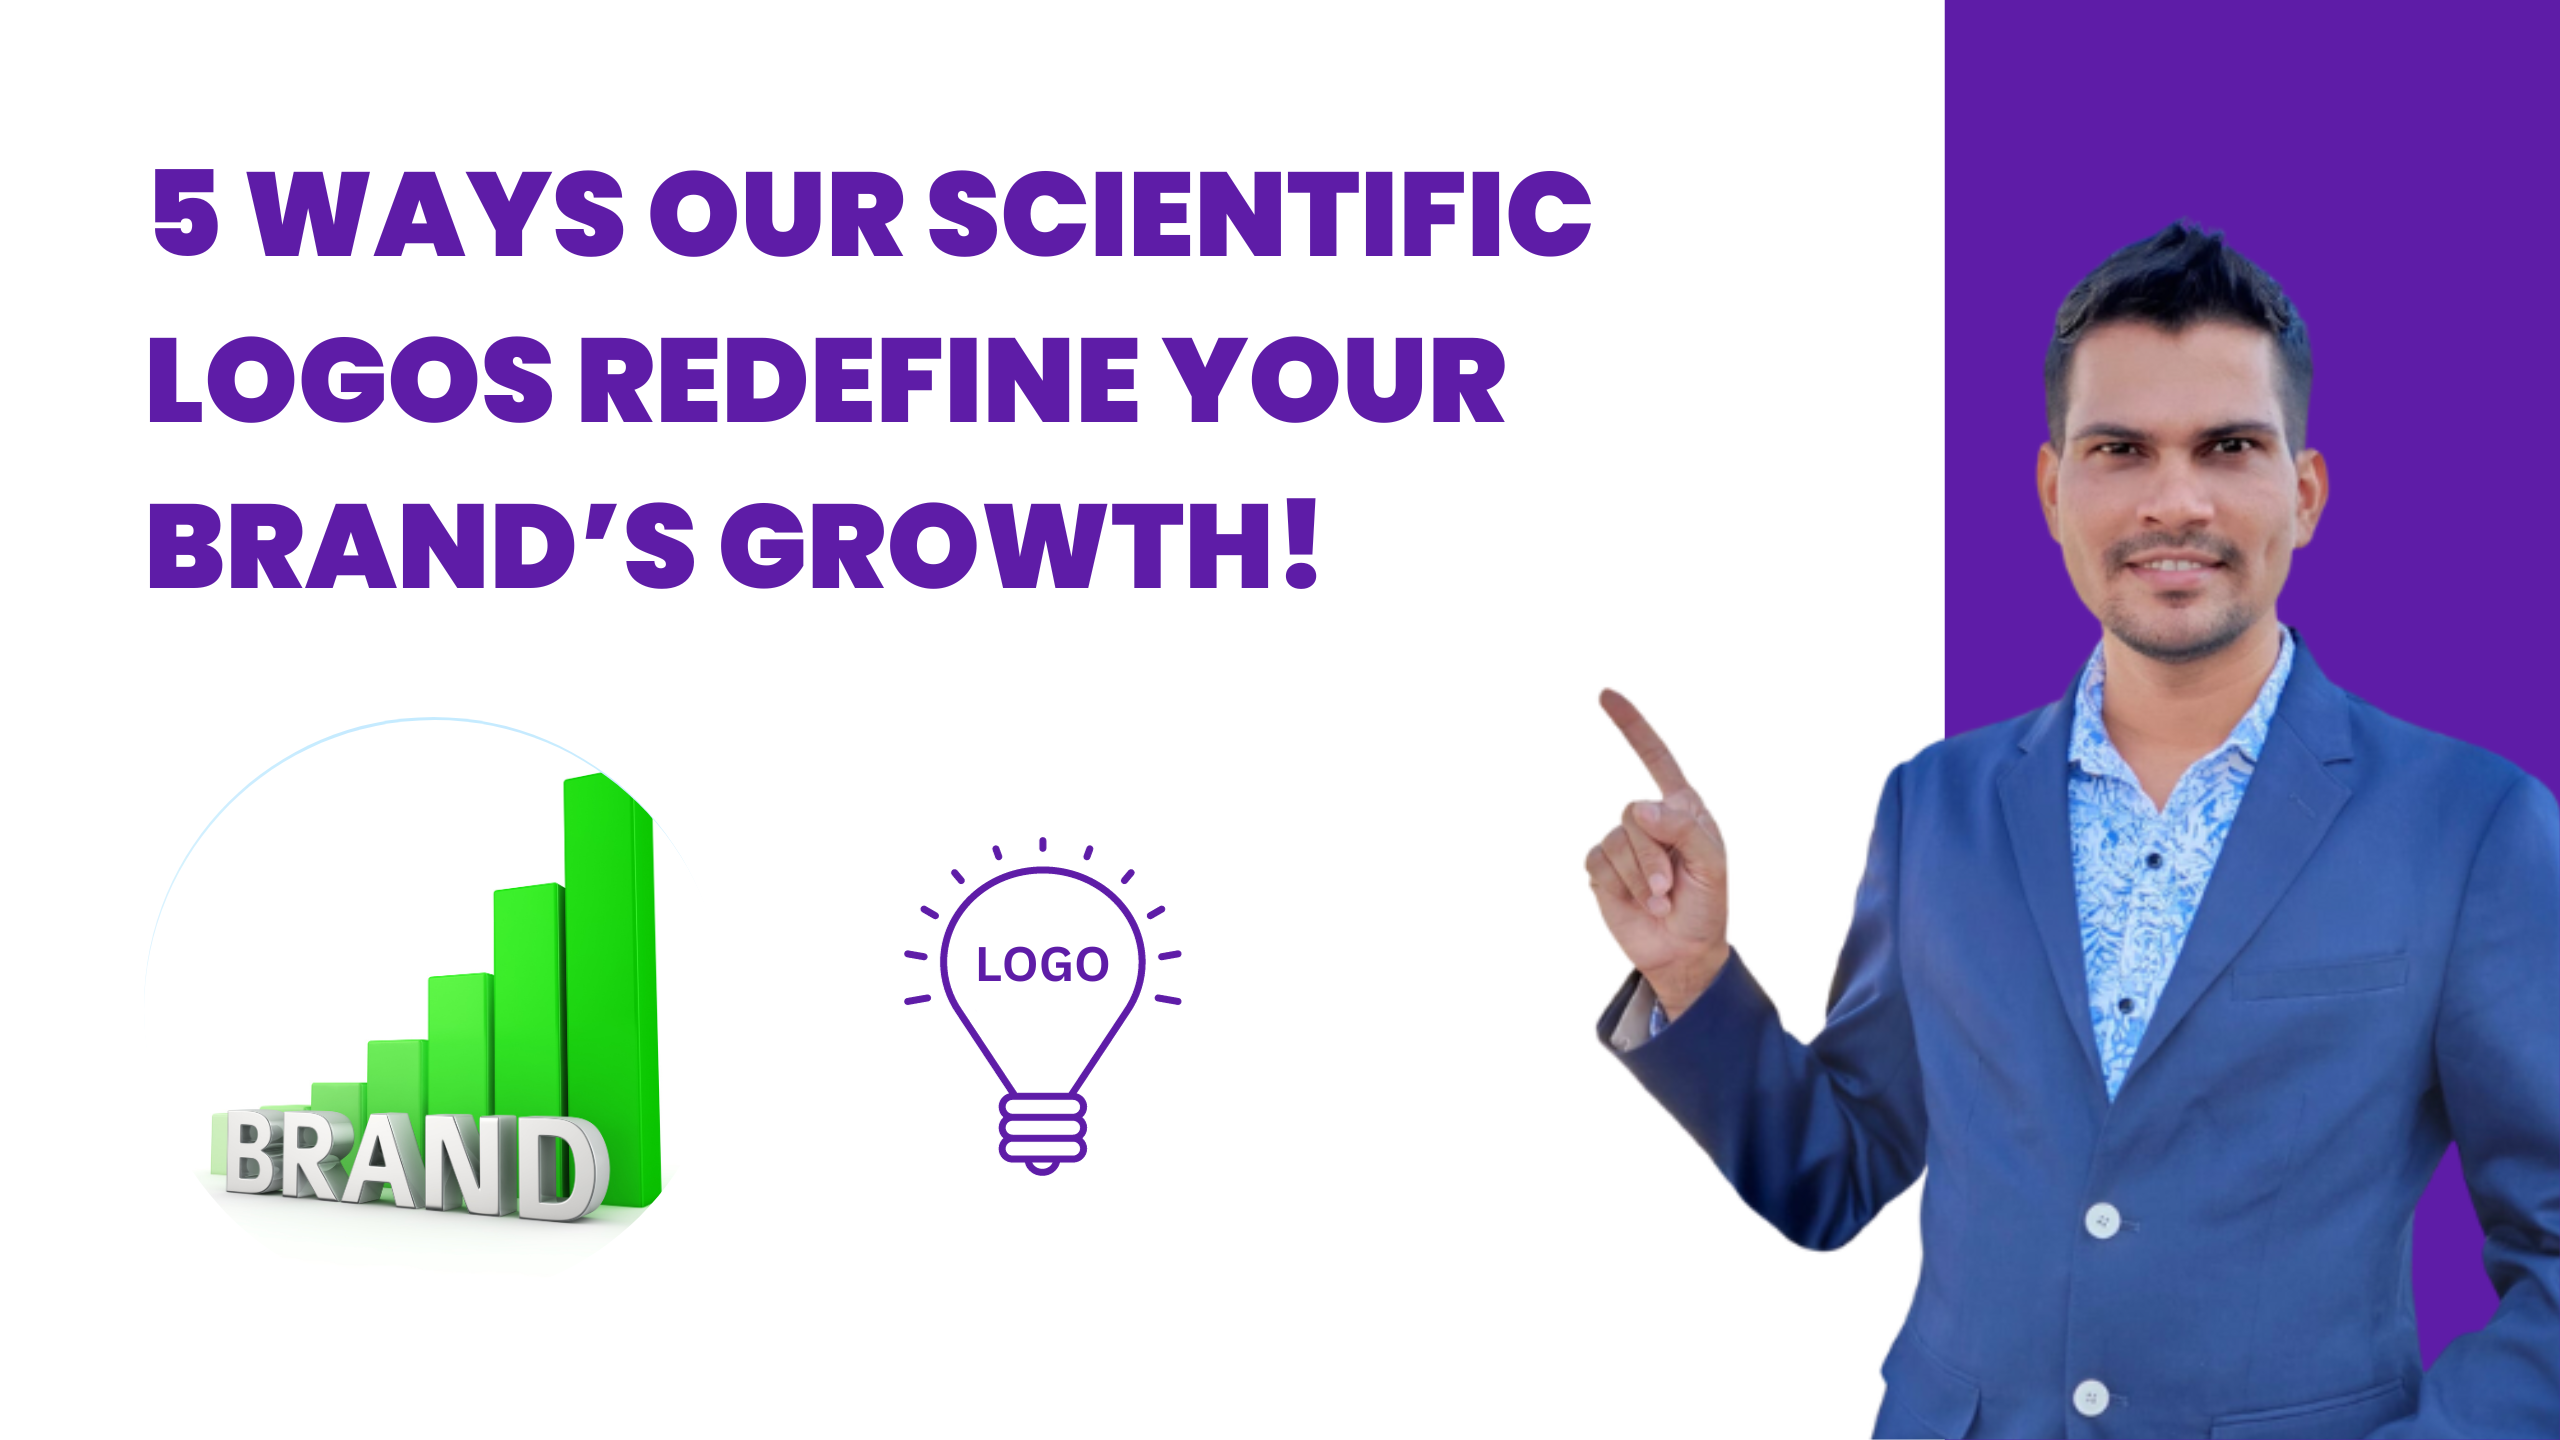 Scientific Logo, 5 Important Ways Our Scientific Logos Redefine Your Brand’s Growth!, Scientific Logo by Subhash